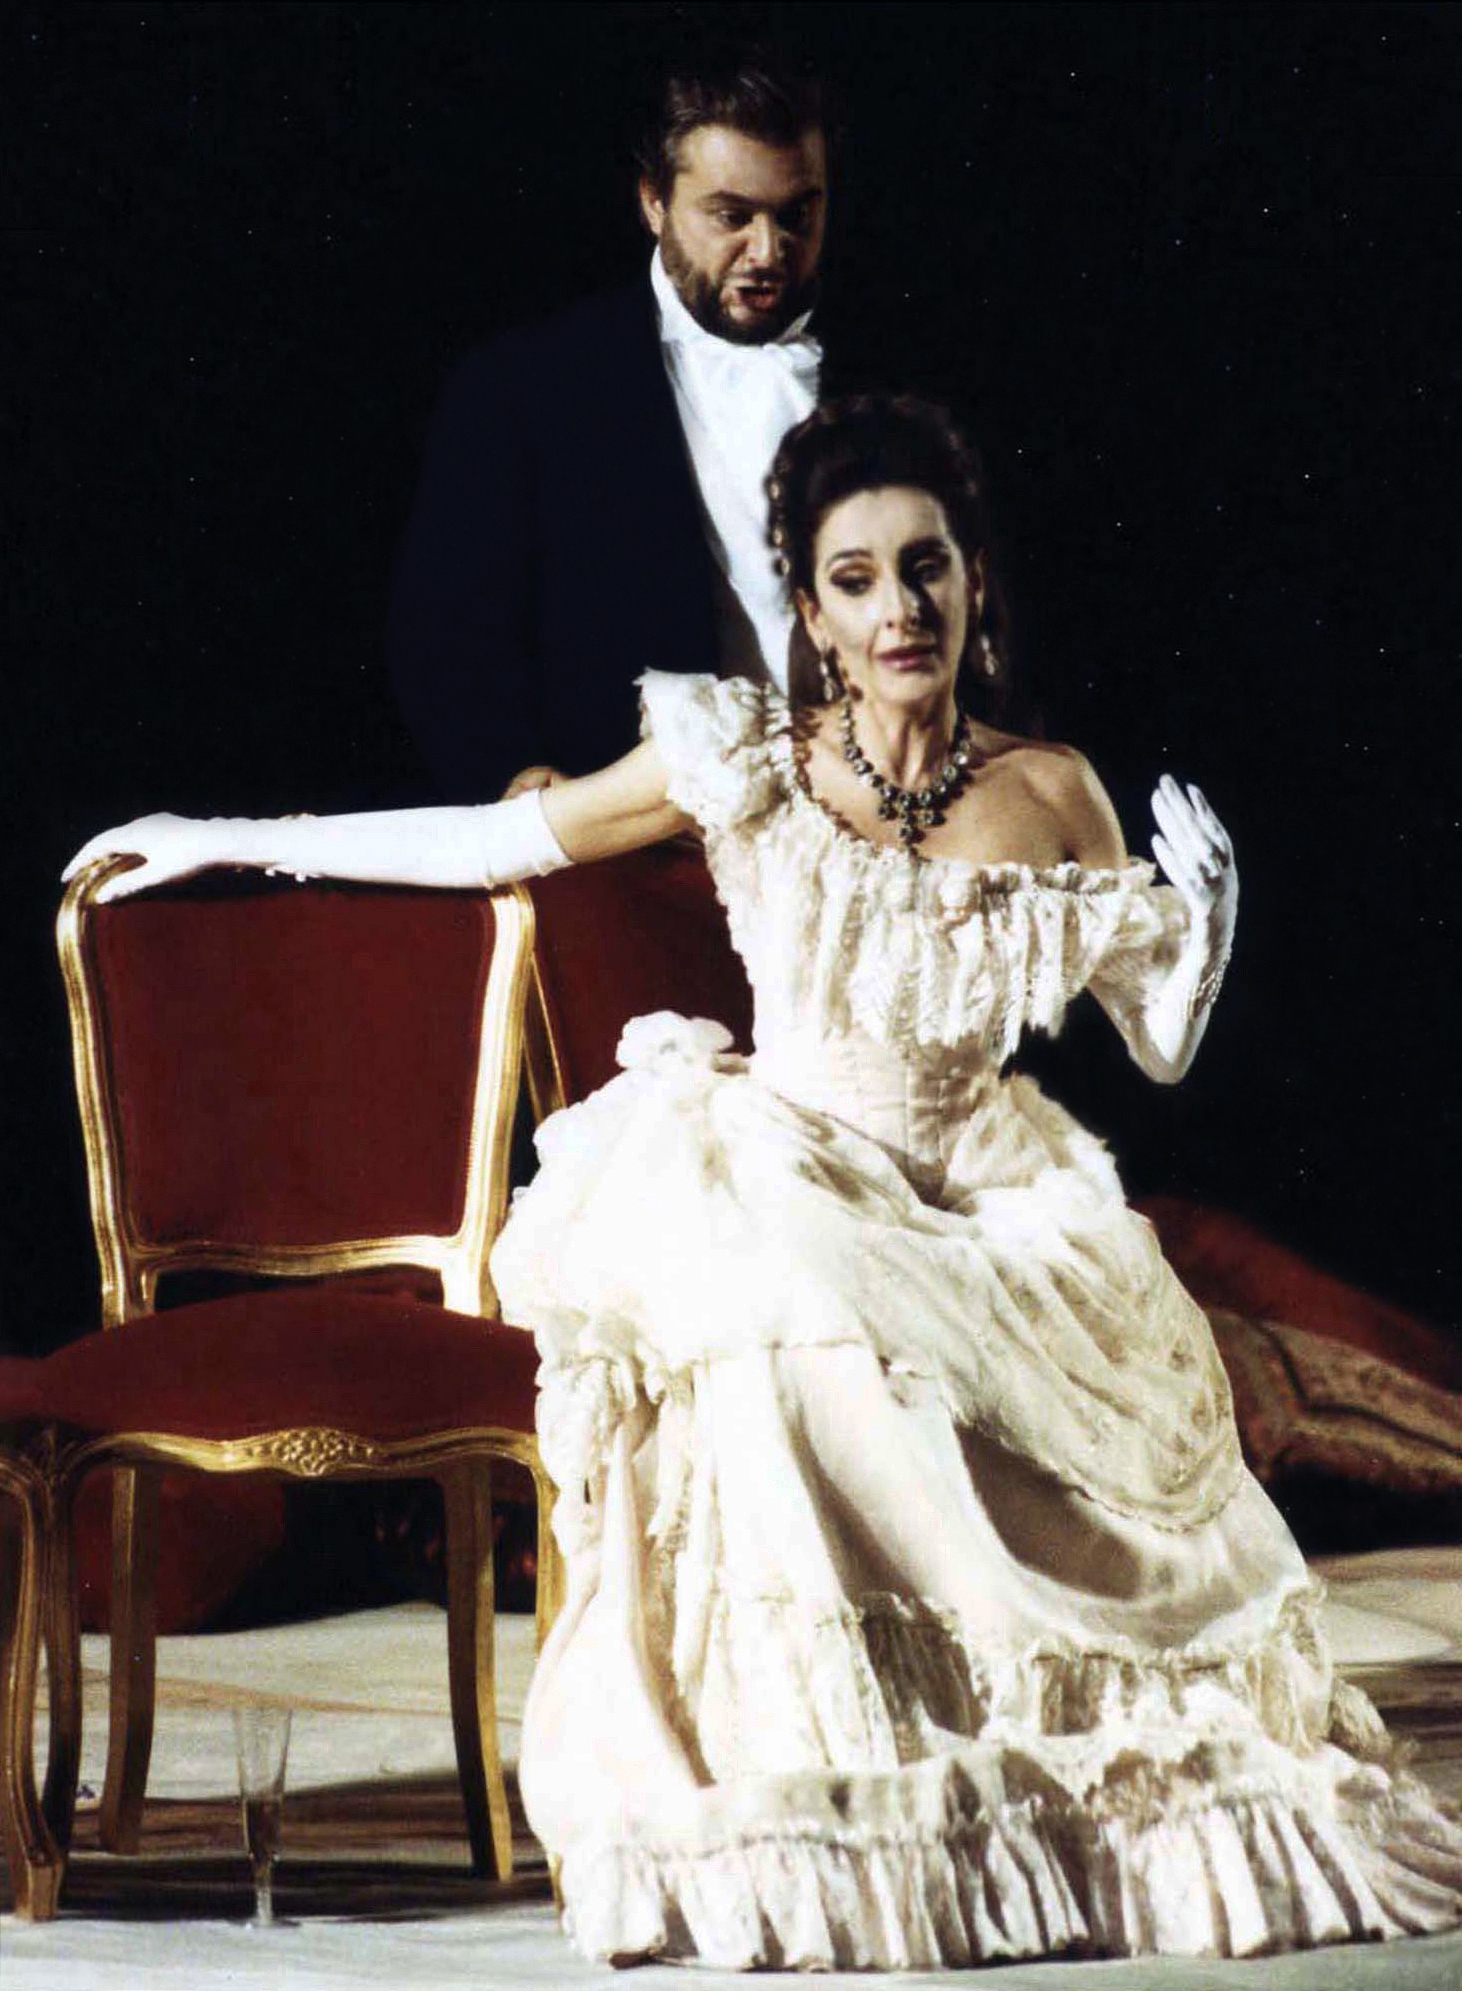 Lucia Aliberti with the French tenor Jean-Luc Viala⚘Rome Opera House"⚘Rome⚘Opera⚘"La Traviata”⚘On Stage⚘Photo taken from the TV News⚘:http://www.luciaaliberti.it #luciaaliberti #jeanlucviala #romeoperahouse #rome #latraviata #onstage #tvnews #henningbrockhaus